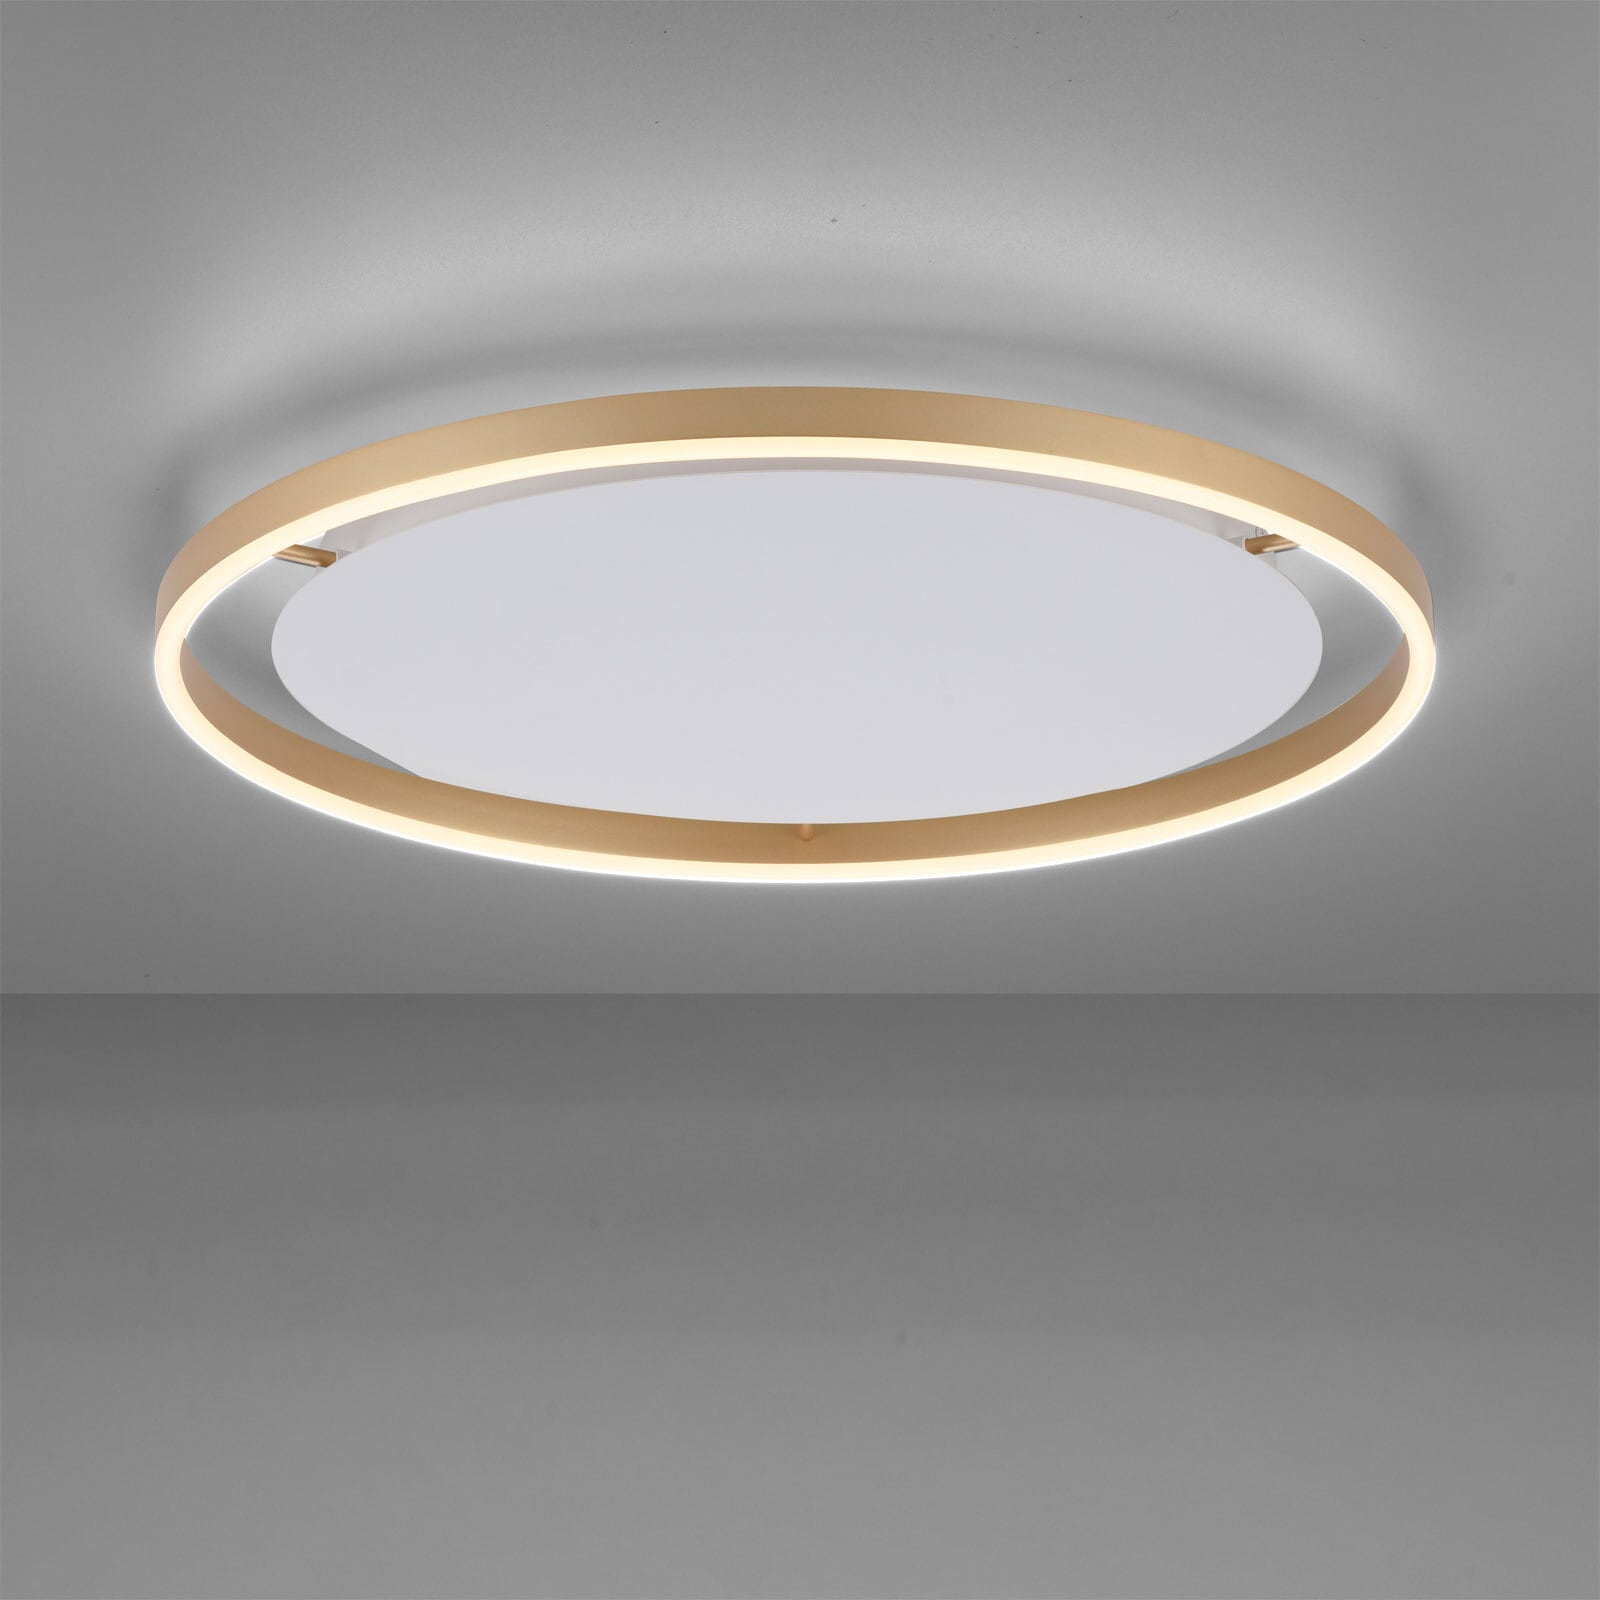 JUST LIGHT LED Deckenlampe RITUS 58 cm messingfarbig